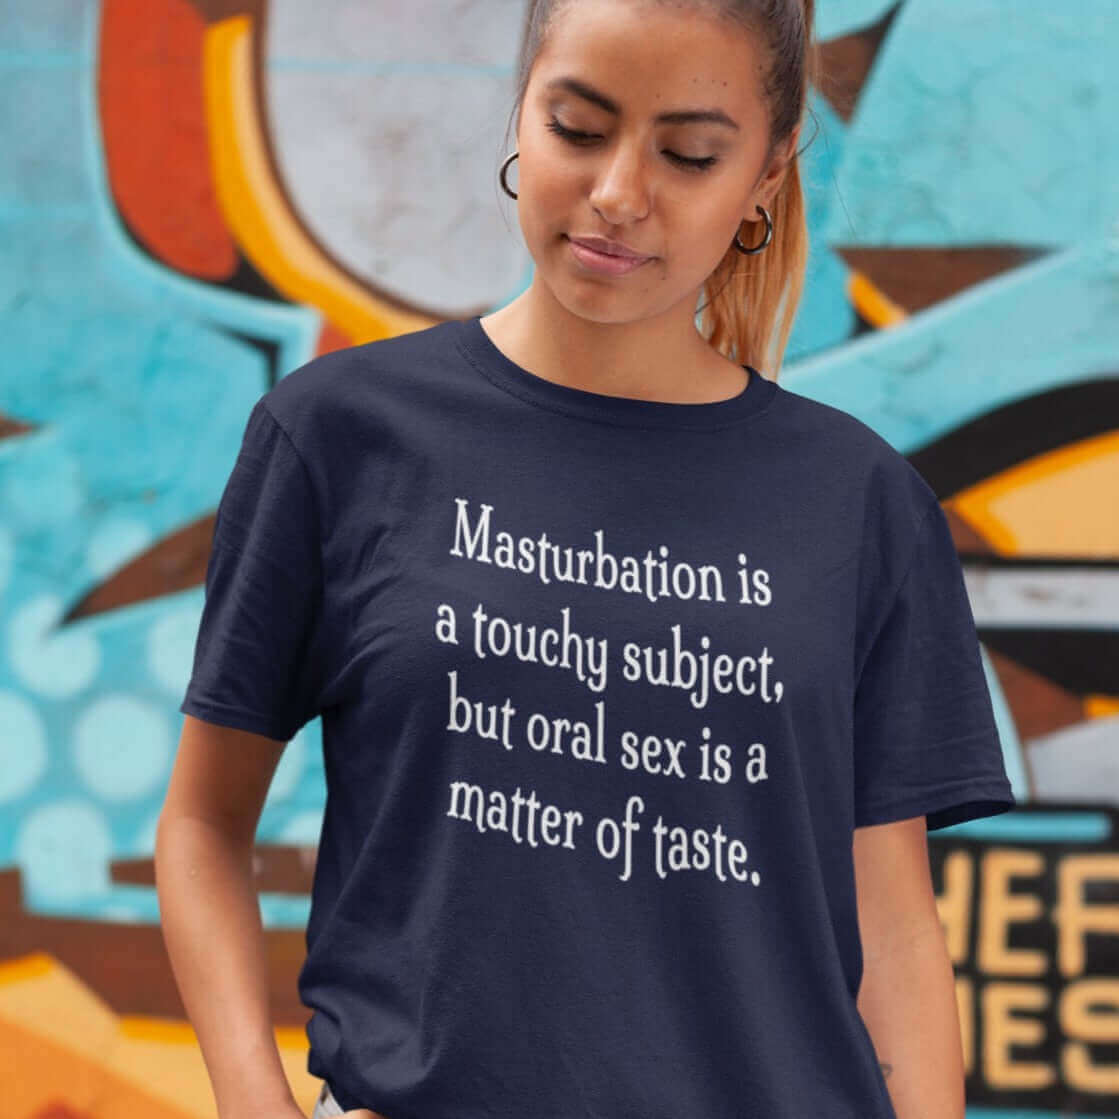 Funny masturbation oral sex sexual humor T-shirt